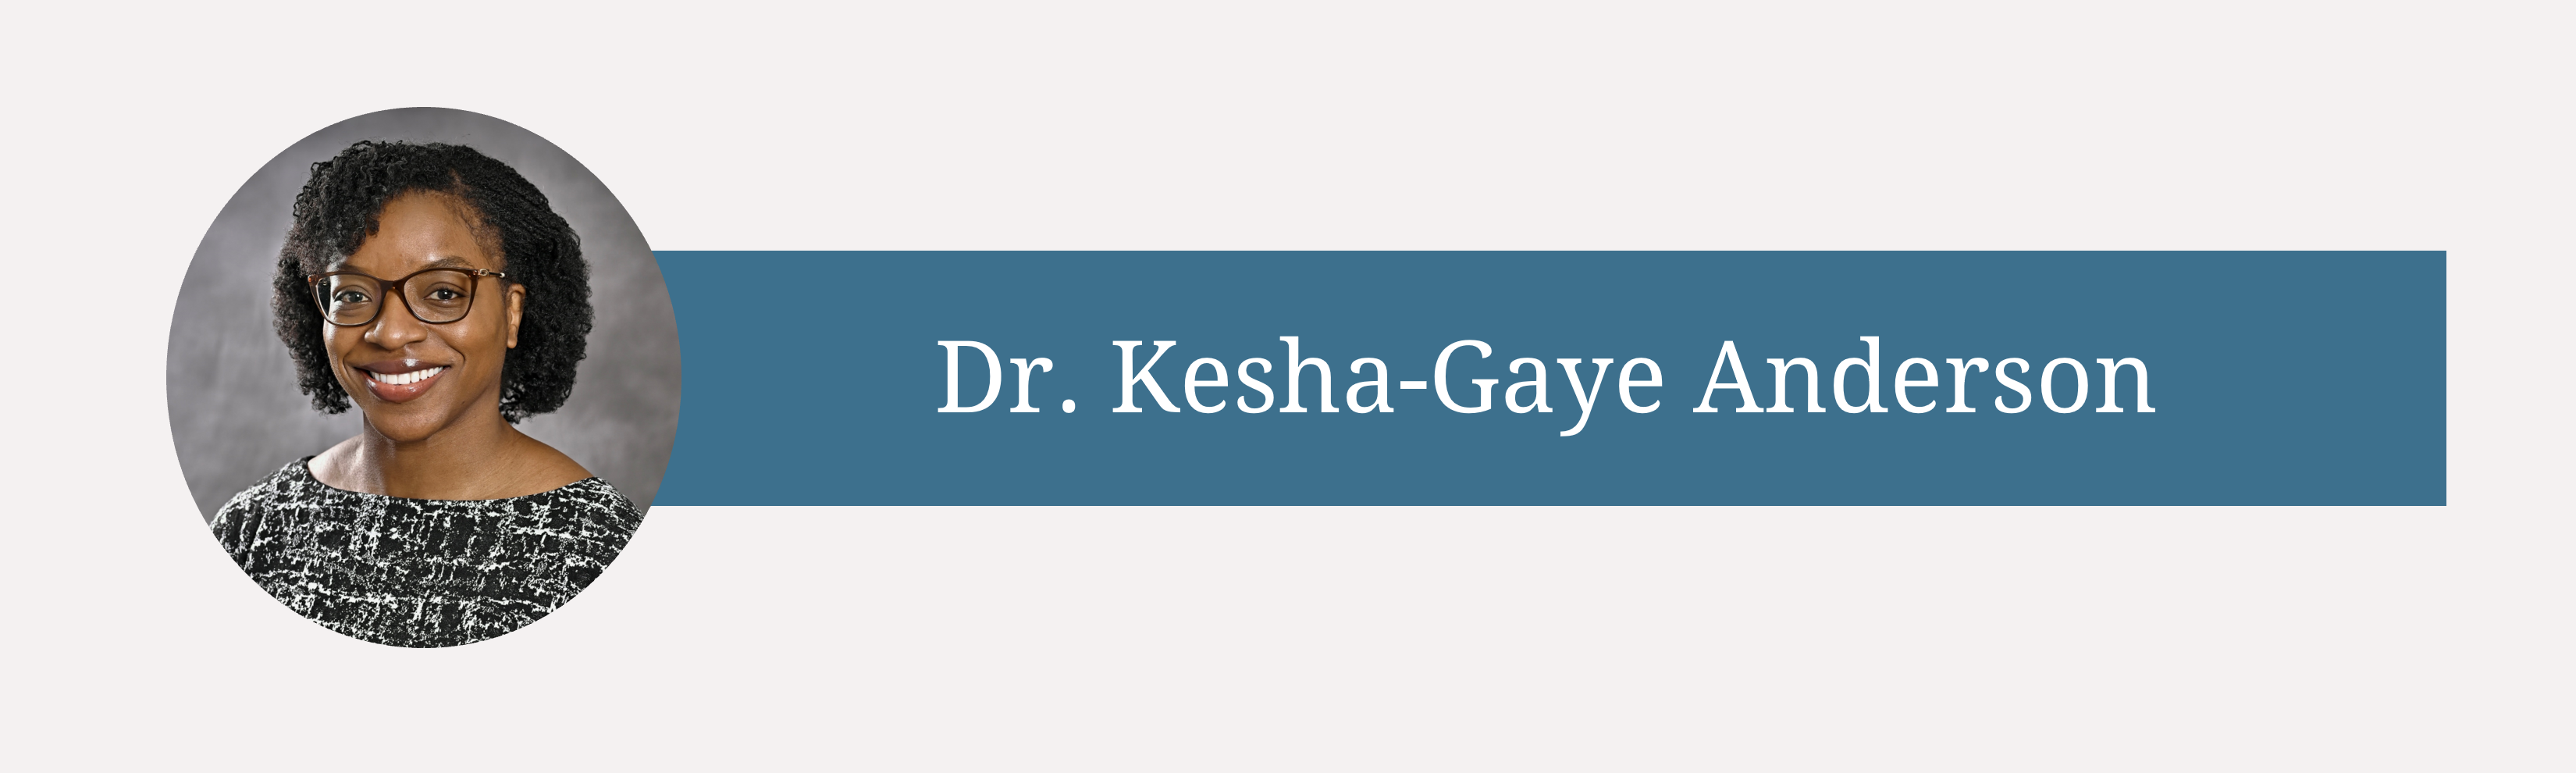 Dr. Kesha-Gaye Anderson Joins WPHPA of Rye Brook